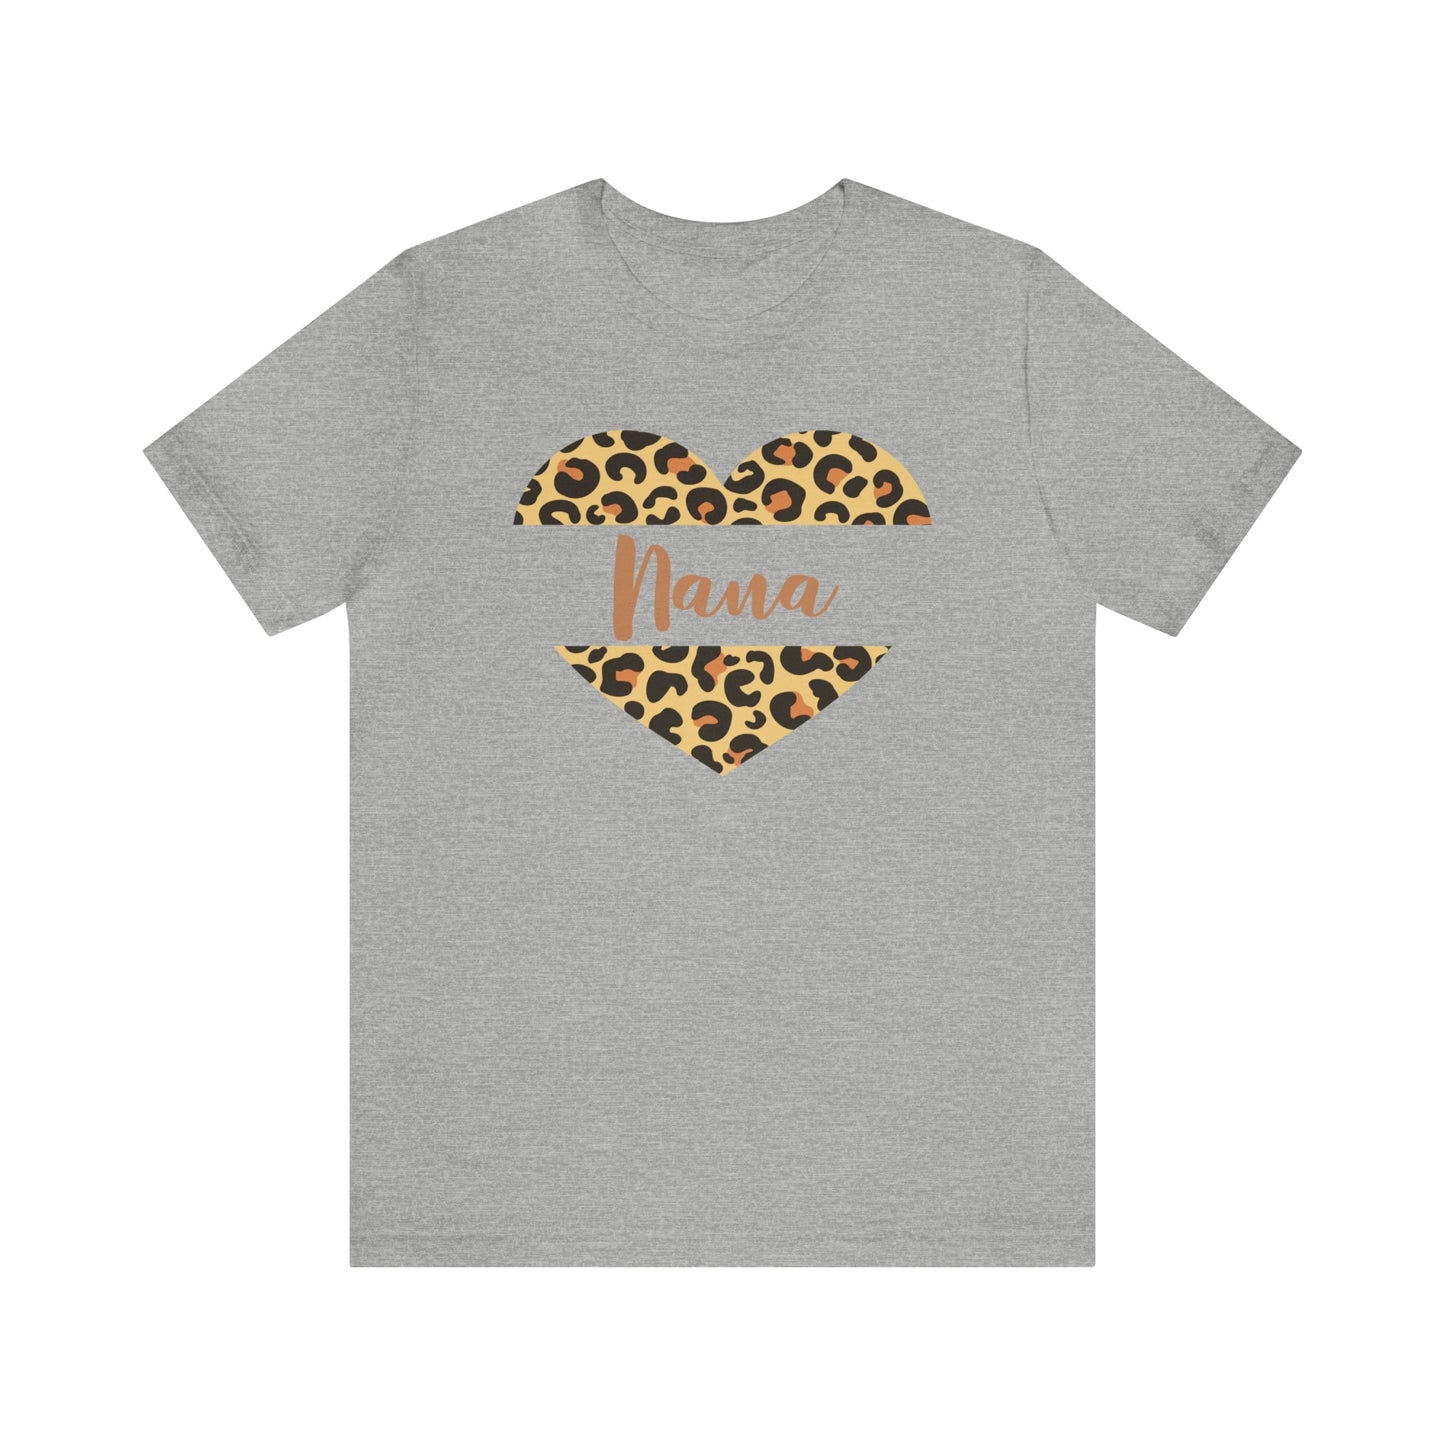 Nana Leopard Heart  Shirt, Mother's Day Gift for Grandma, Cute Nana Shirt, Nana Present, Nana Birthday